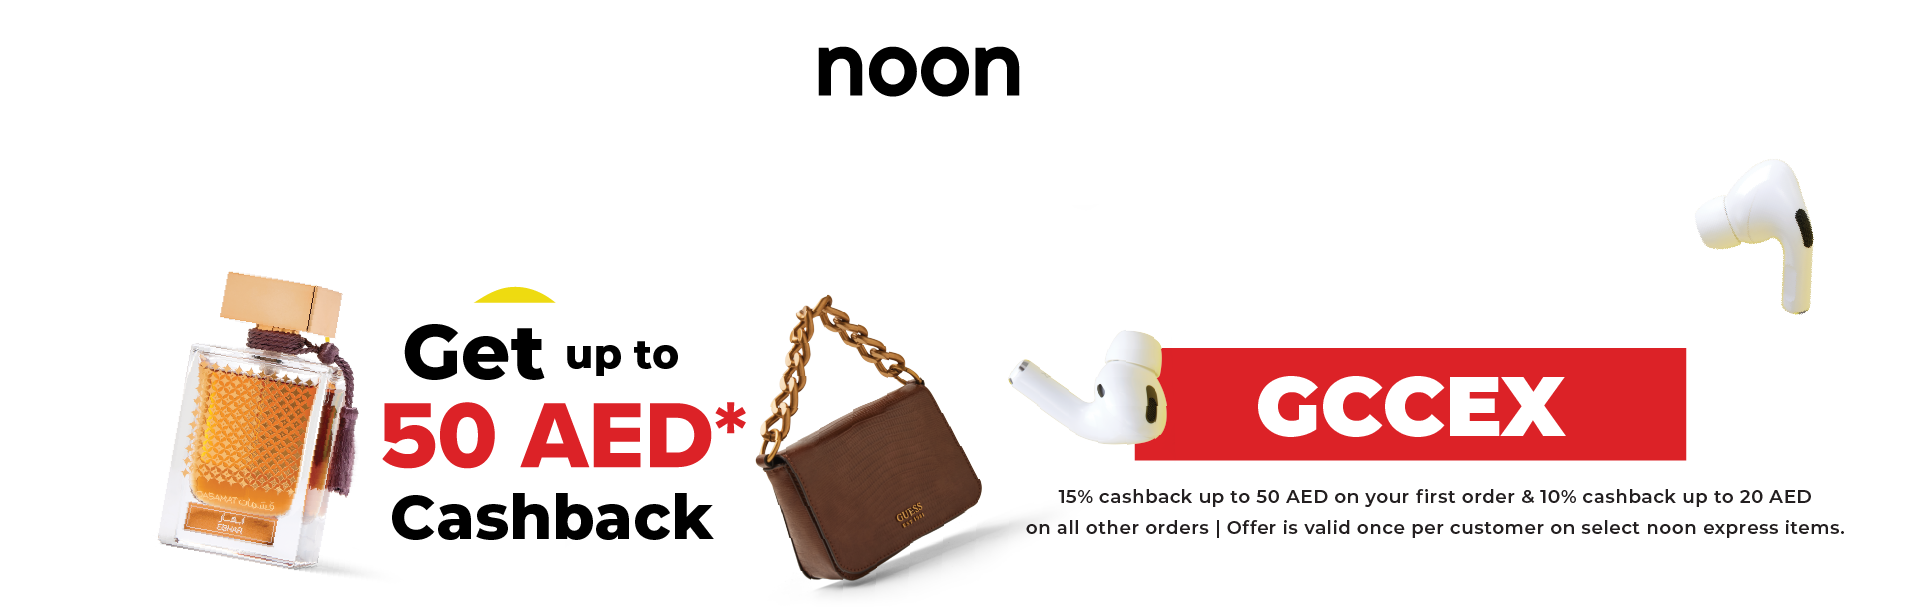 GCC Exchange Noon Offer